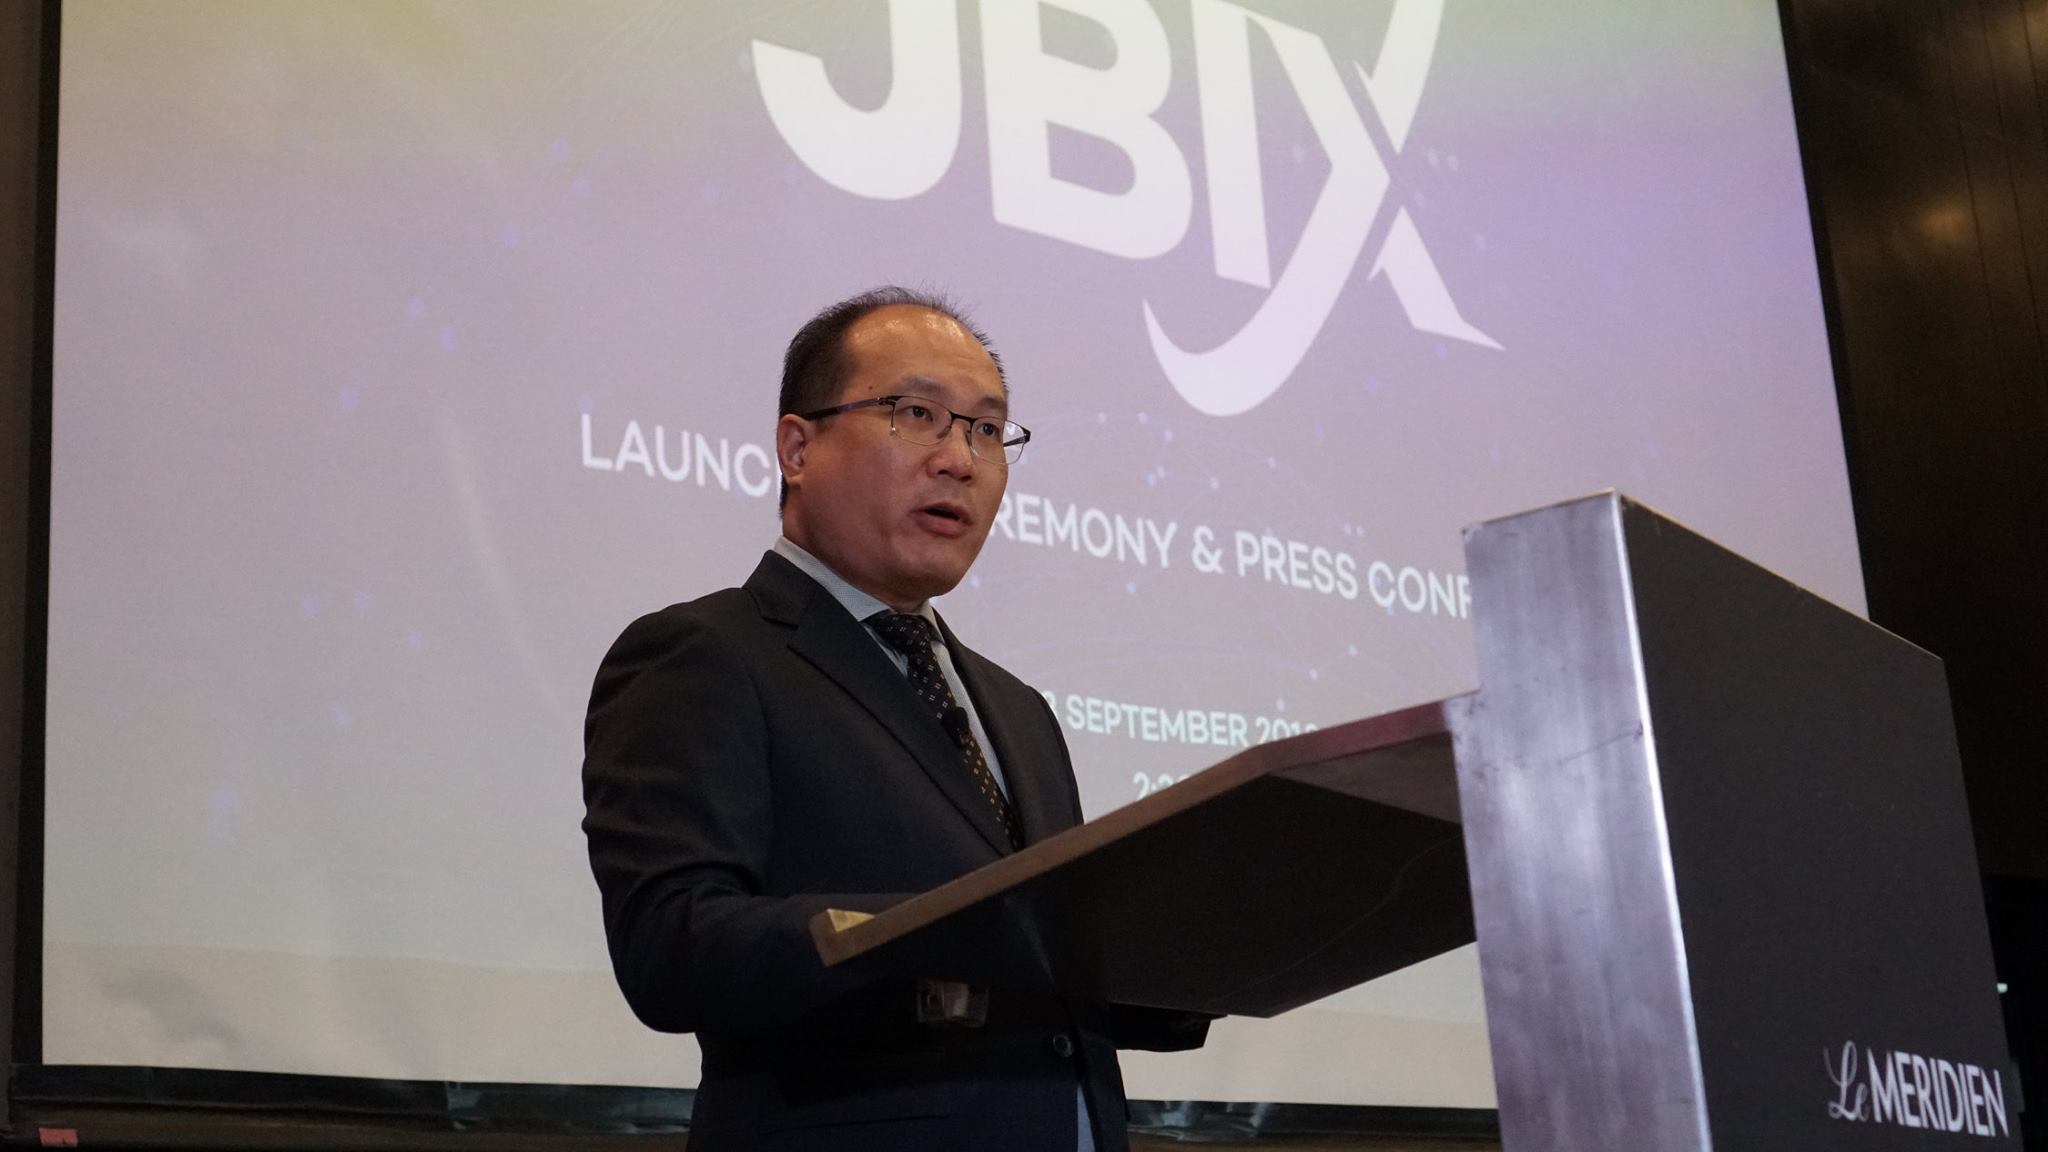 Weng Yew Wong speaking at the launch of JBIX.